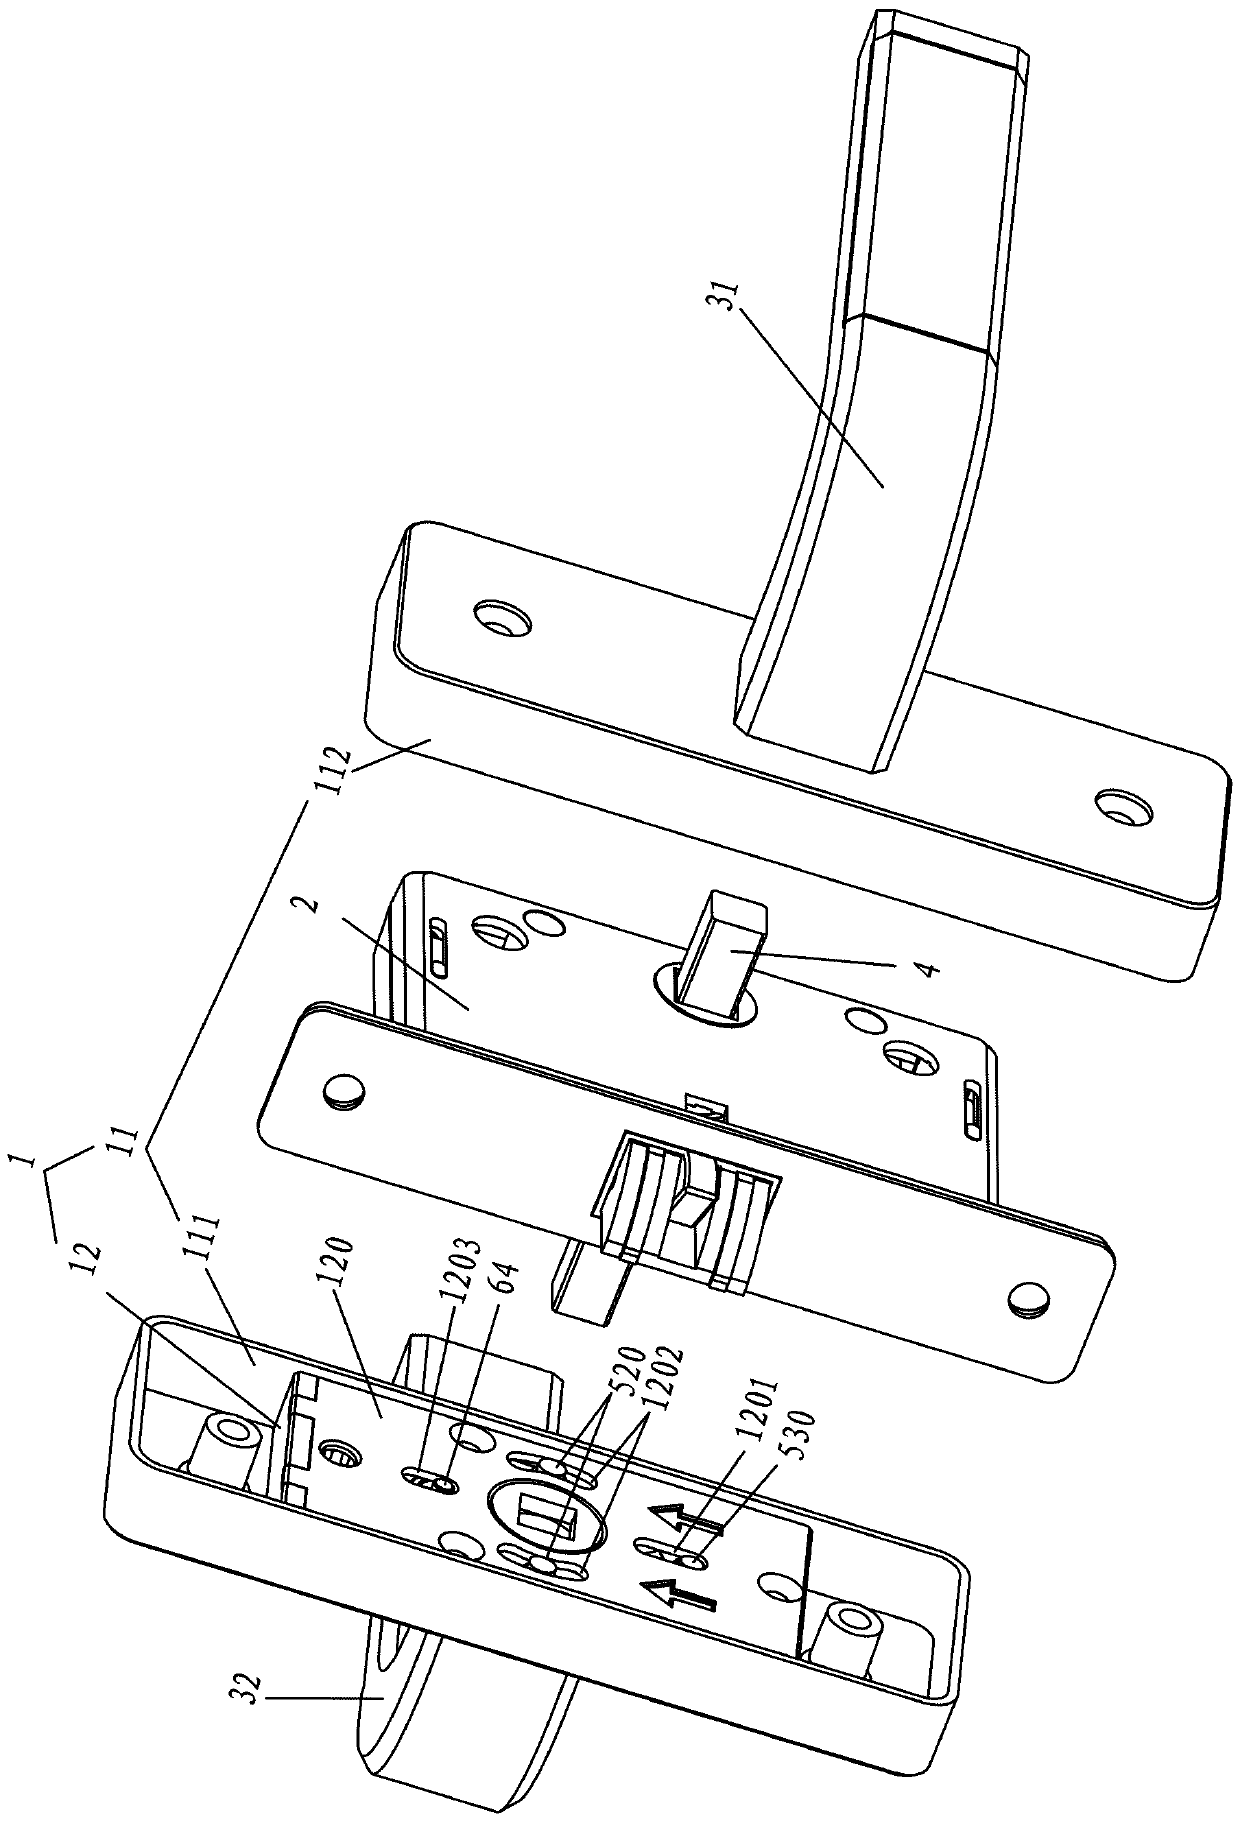 Double lock type door and window handle assembly